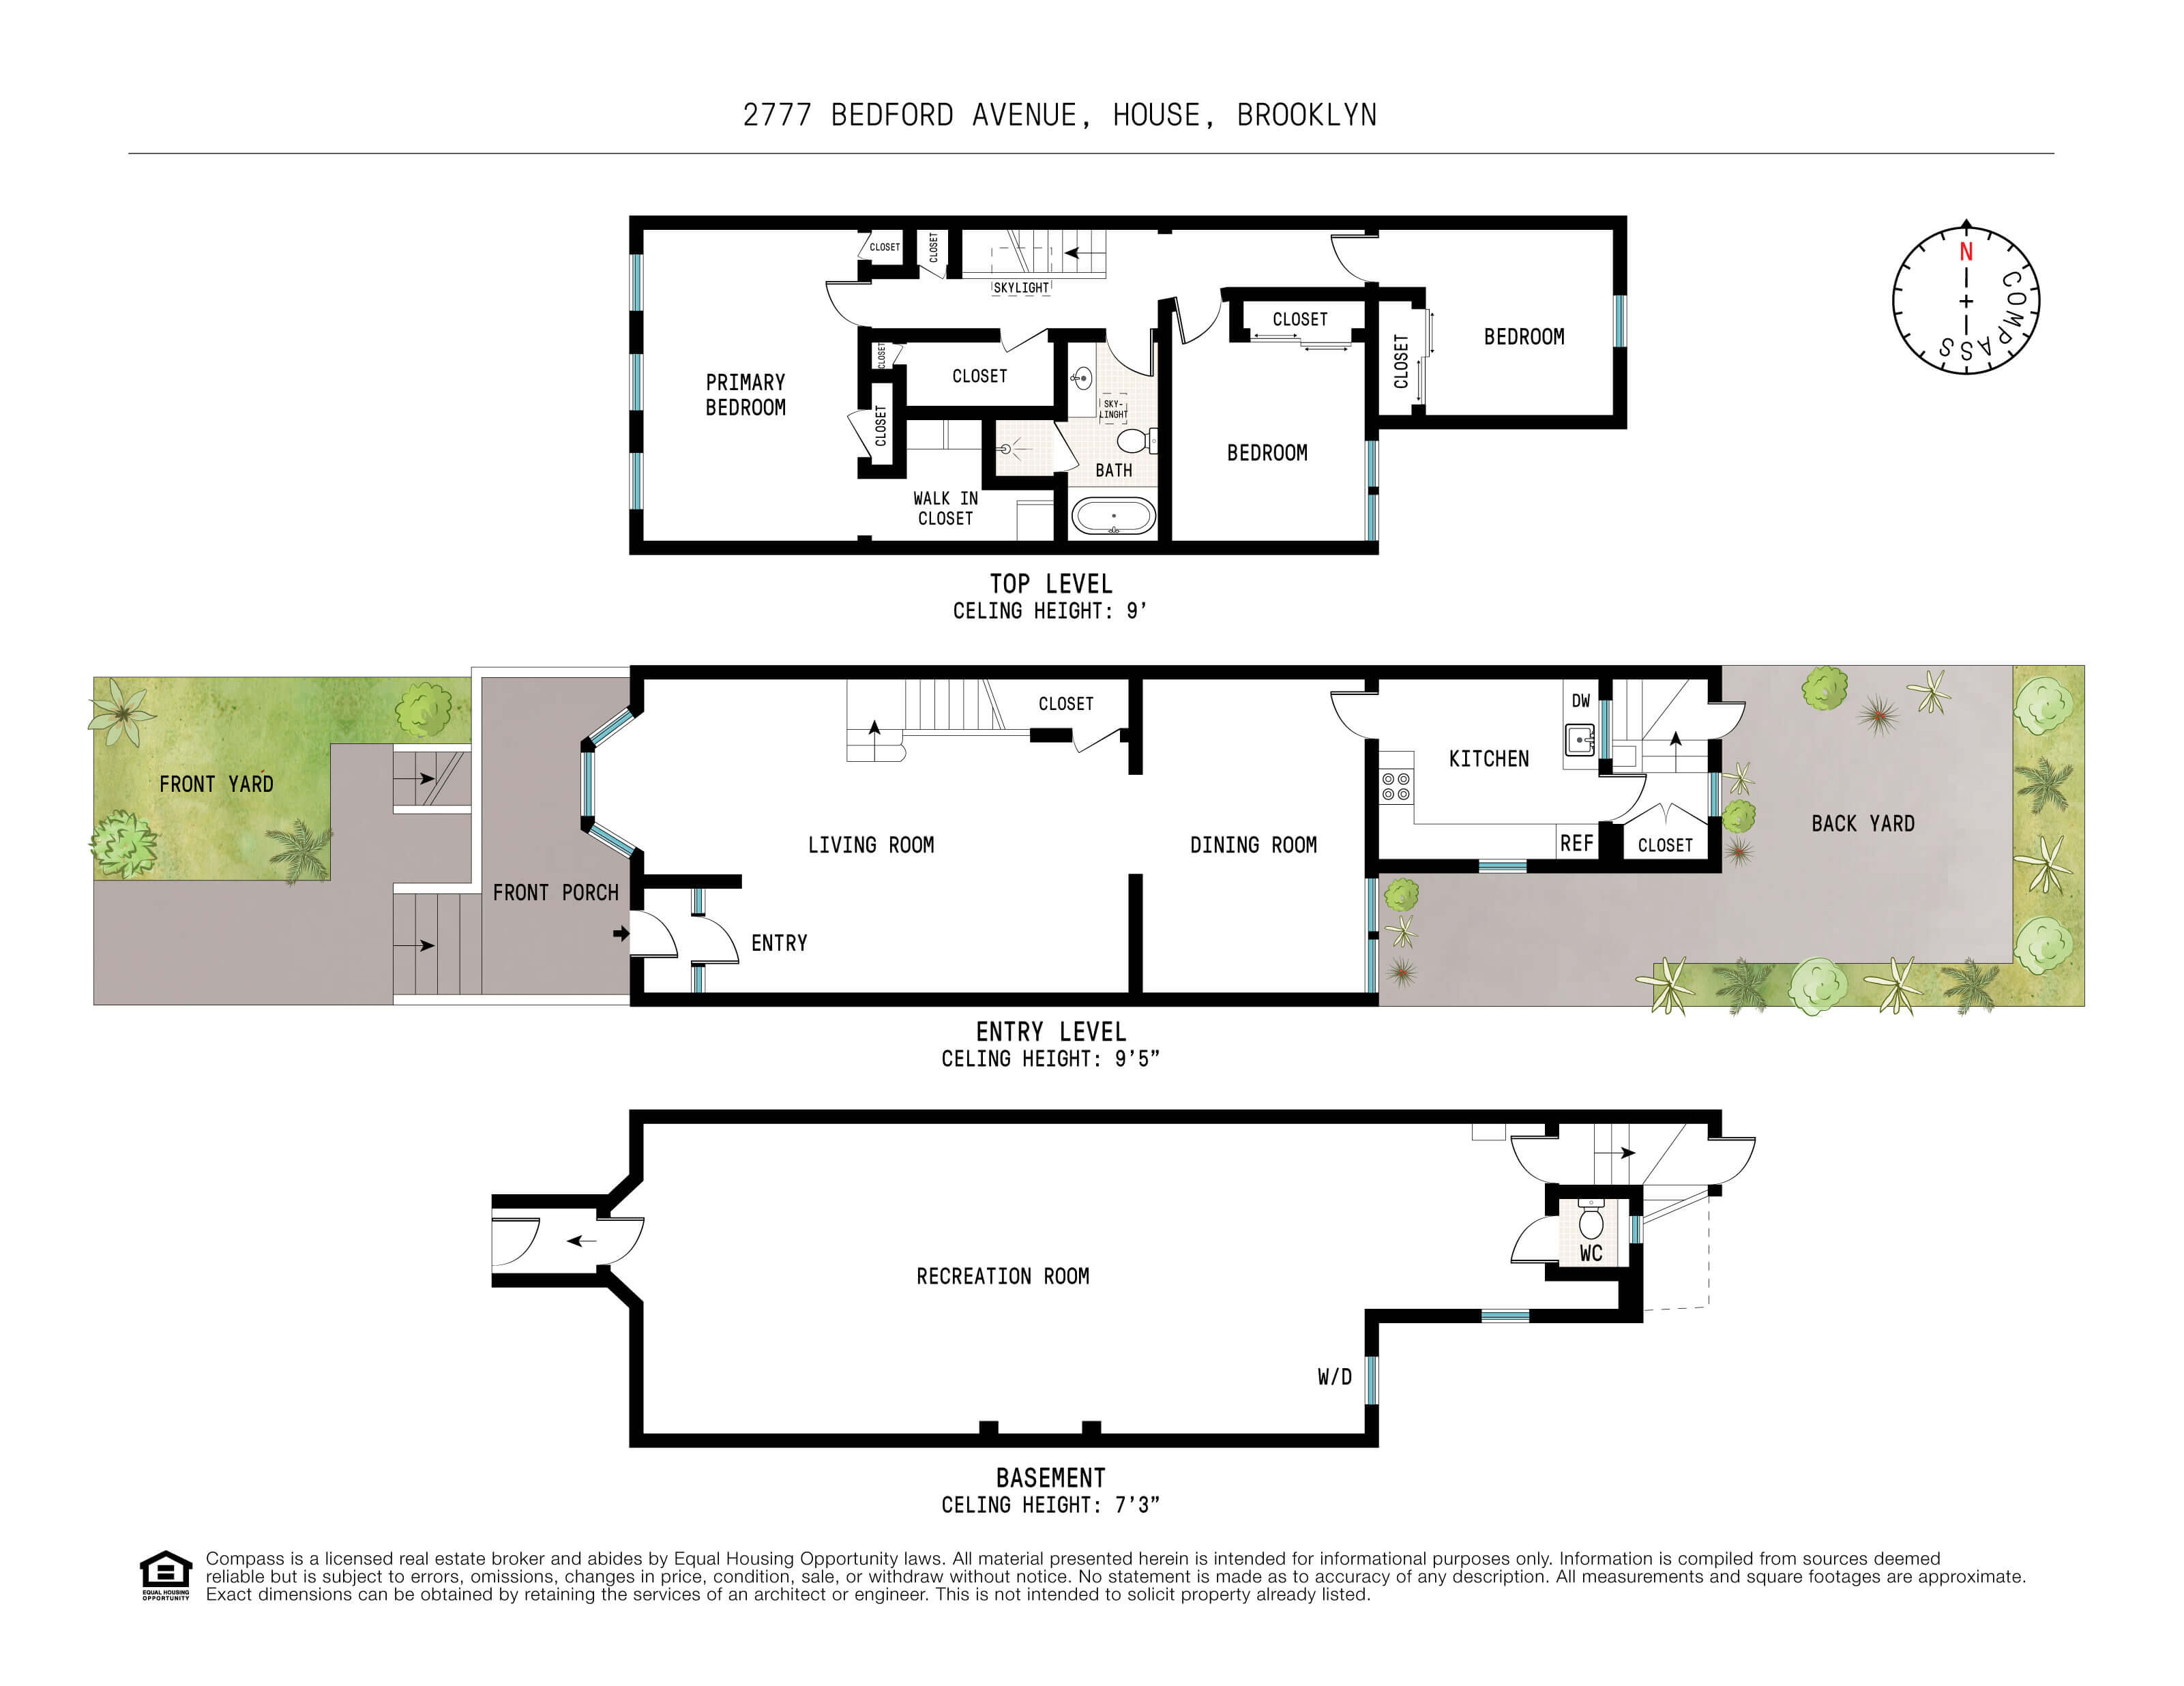 floor plan of 2777 bedford avenue